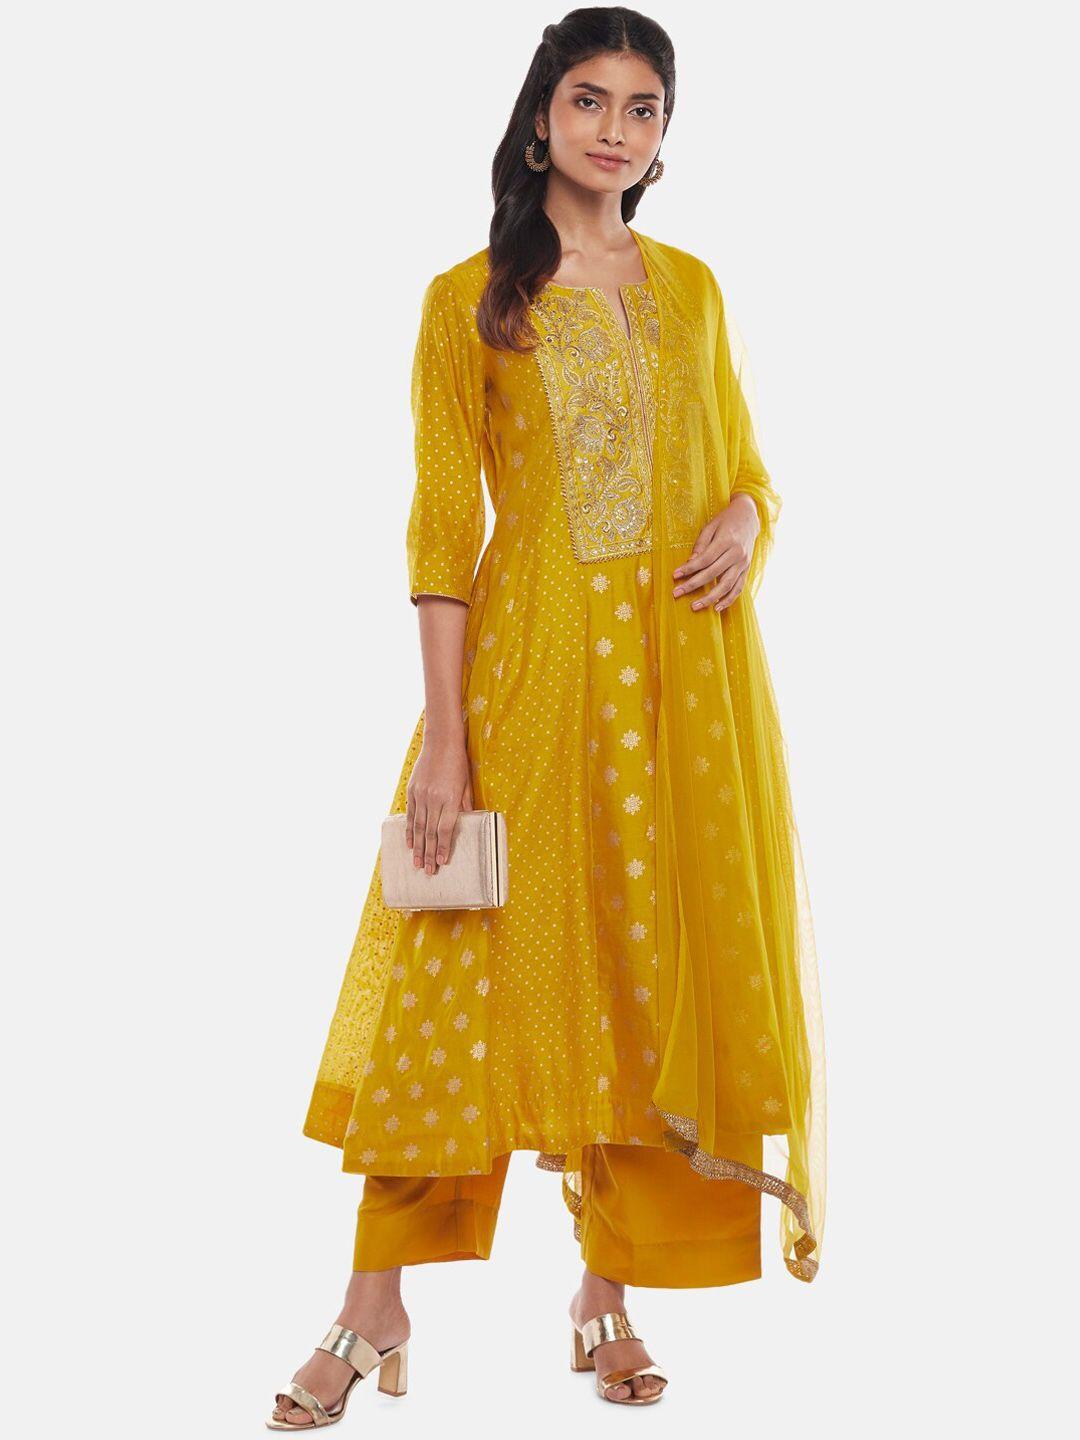 rangmanch-by-pantaloons-women-mustard-embroidered-chanderi-kurta-set-&-dupatta